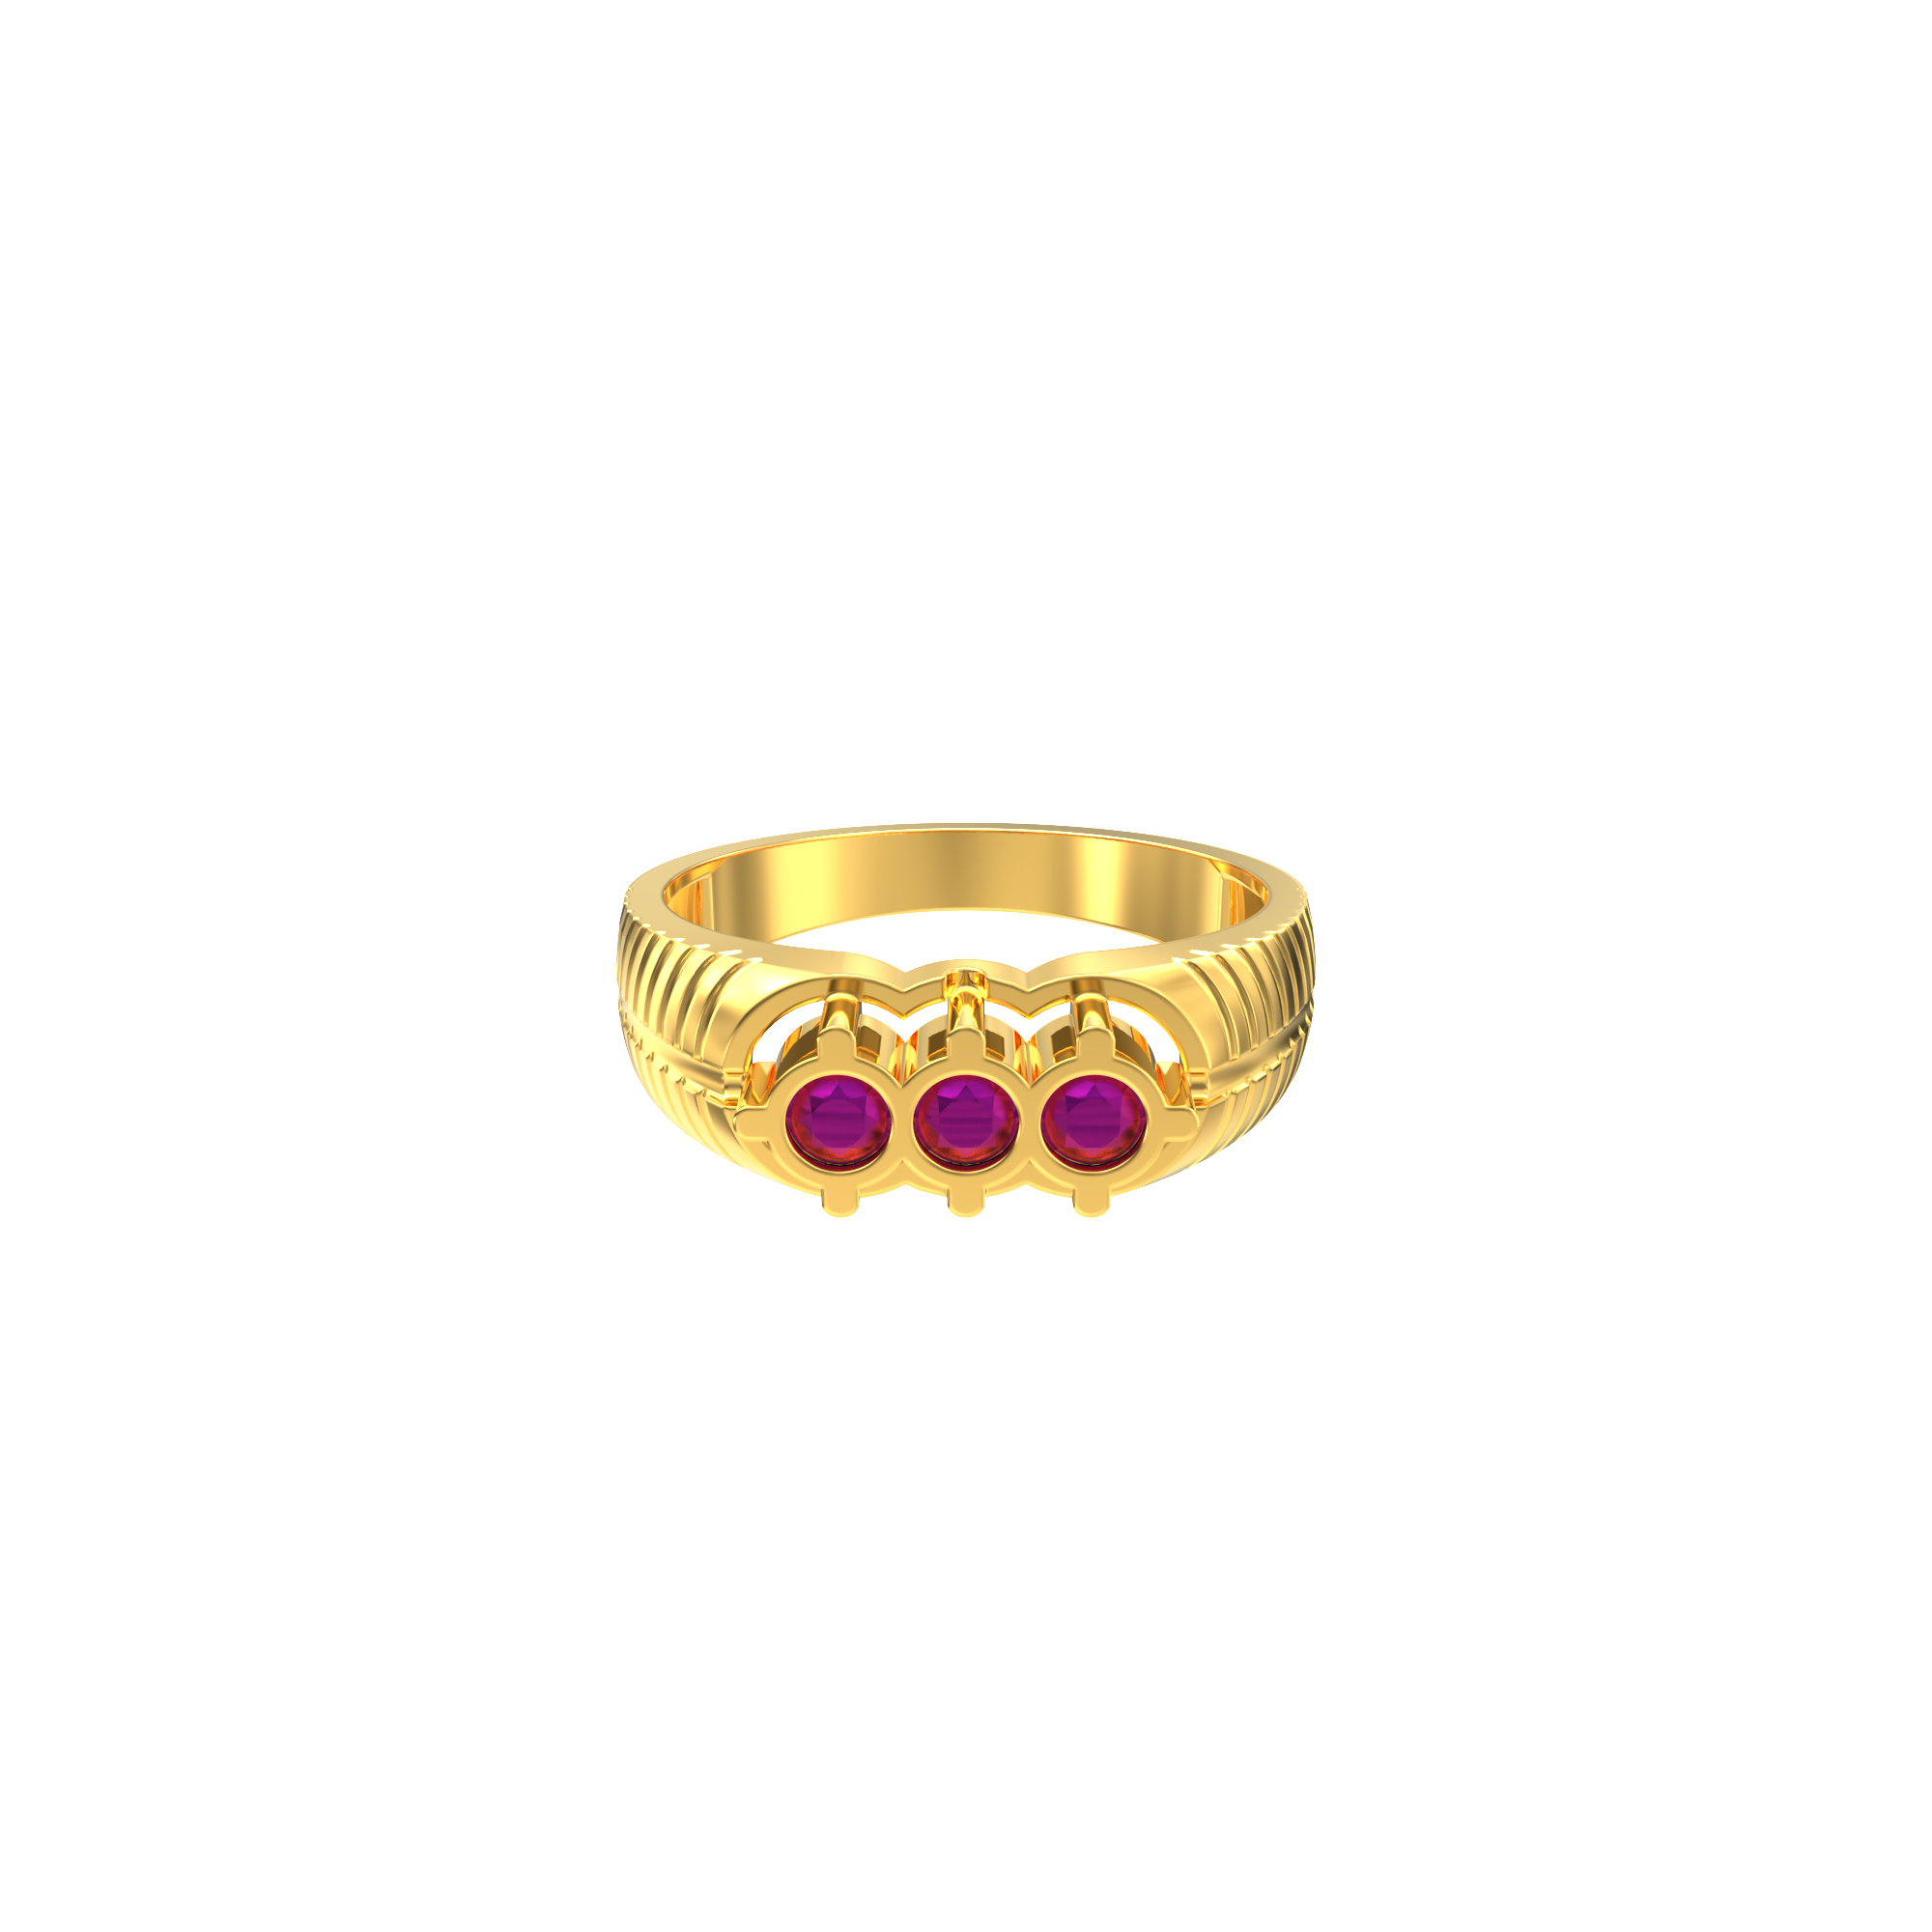 Male-Circular-Design-Gold-Ring